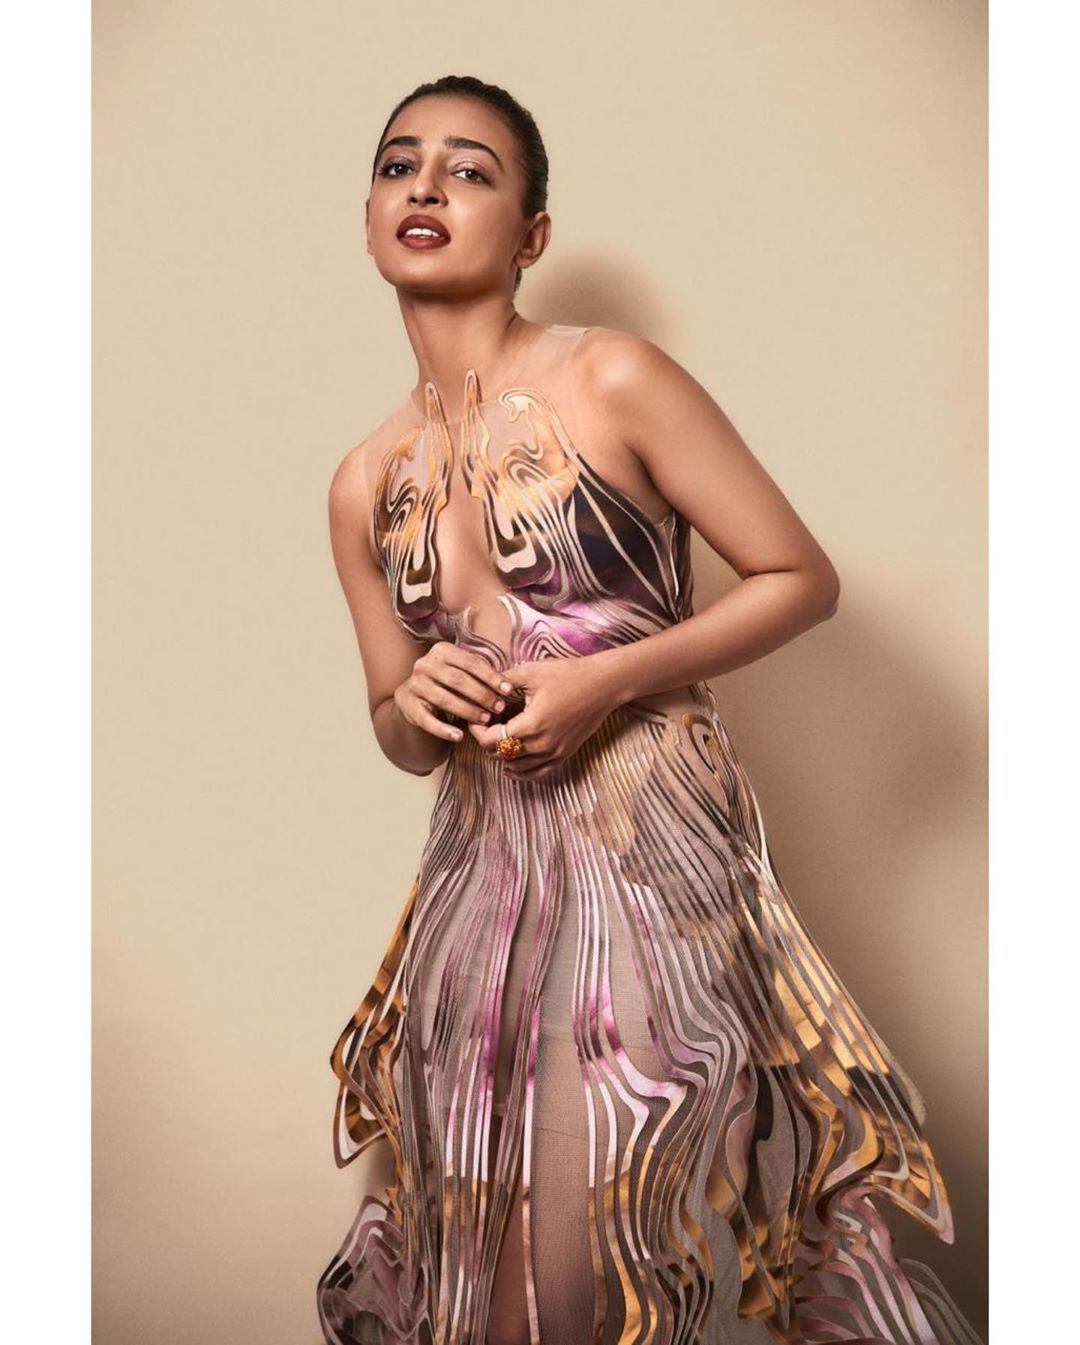 In Pics: Radhika Apte shares a very bold photo in bikini, said- Enjoying lockdown